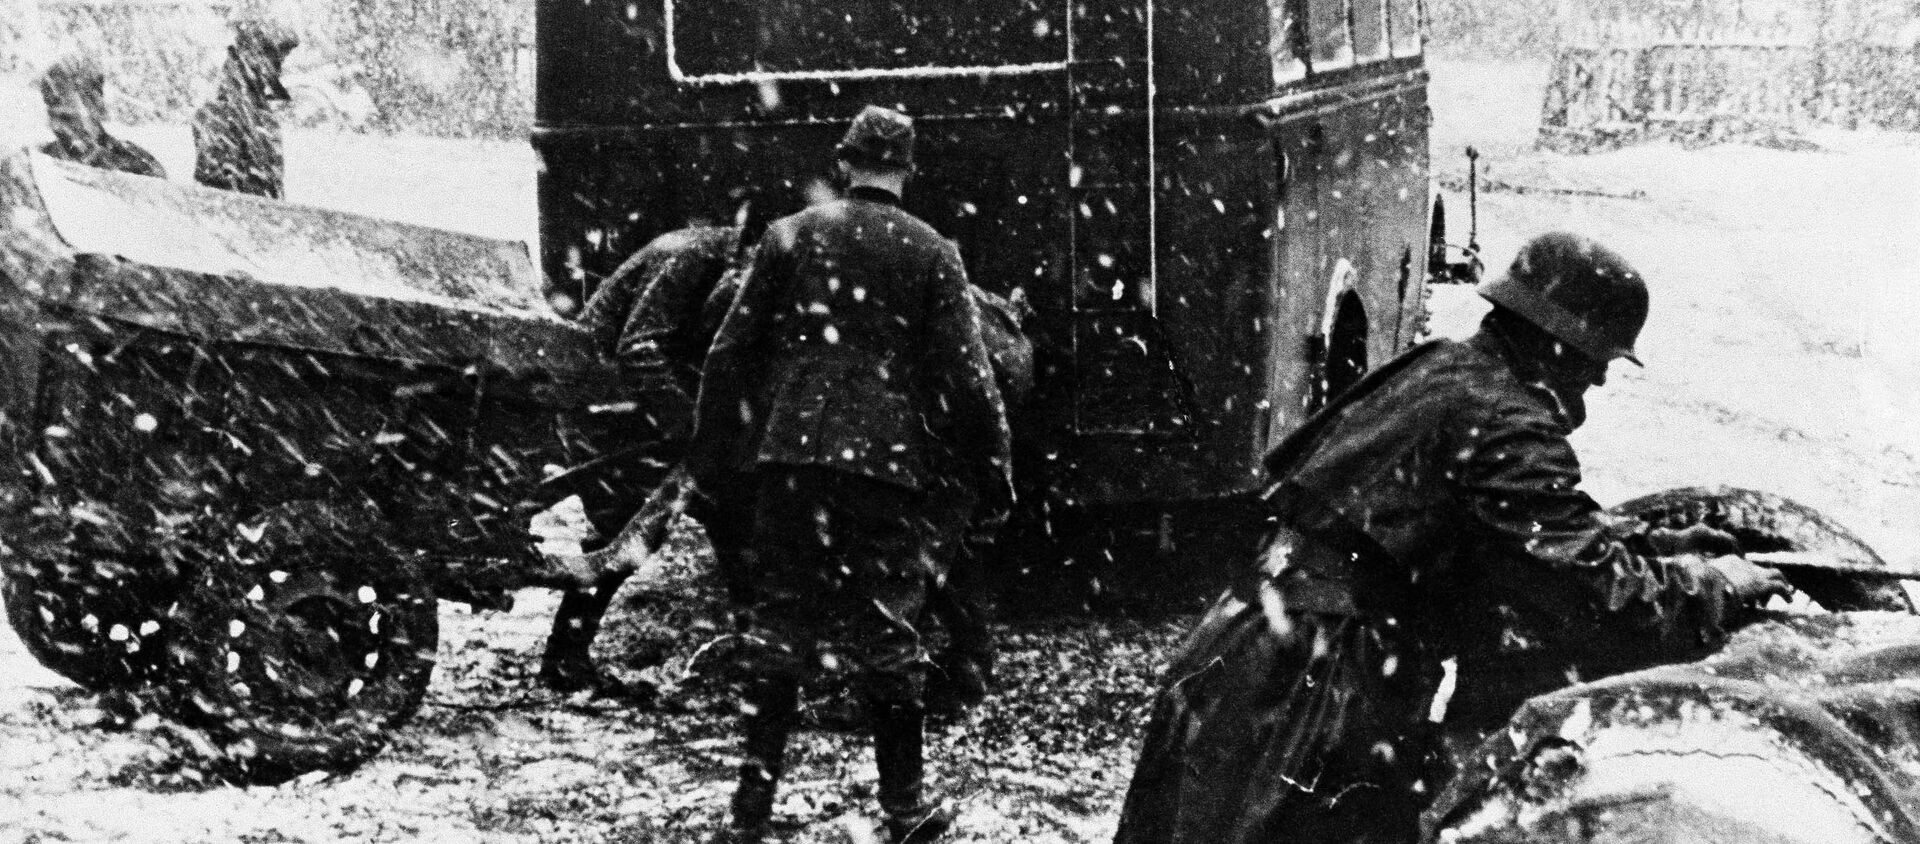 Nemačka vojska zaglavljena u snegu u Rusiji, 28. decembar 1942. - Sputnik Srbija, 1920, 03.01.2021